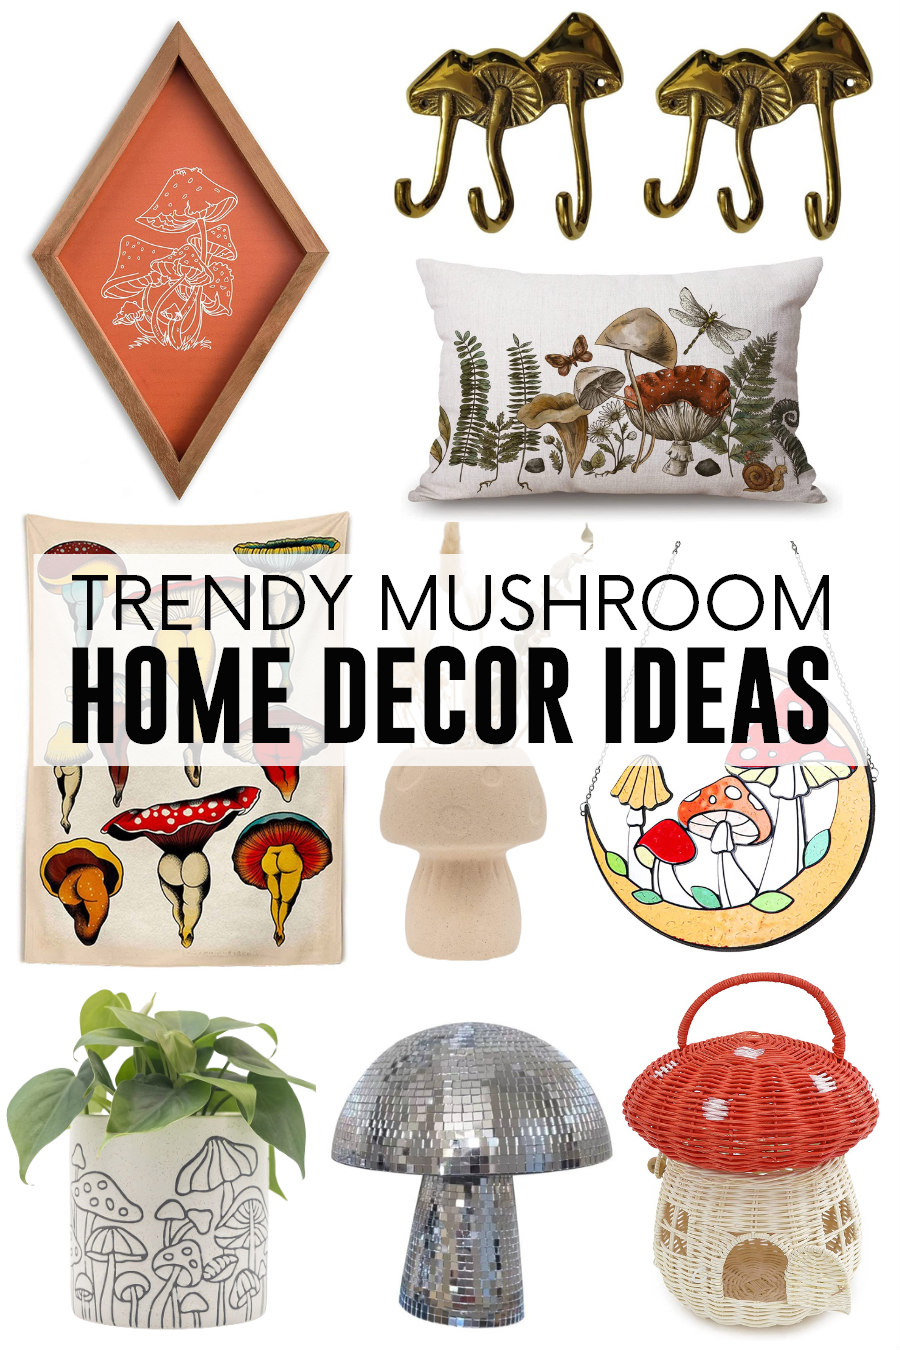 Trendy mushroom home decor ideas including wall art, wall hooks, pillows, wall art, vases, flower pots, suncatchers, tabletop decor, and baskets.